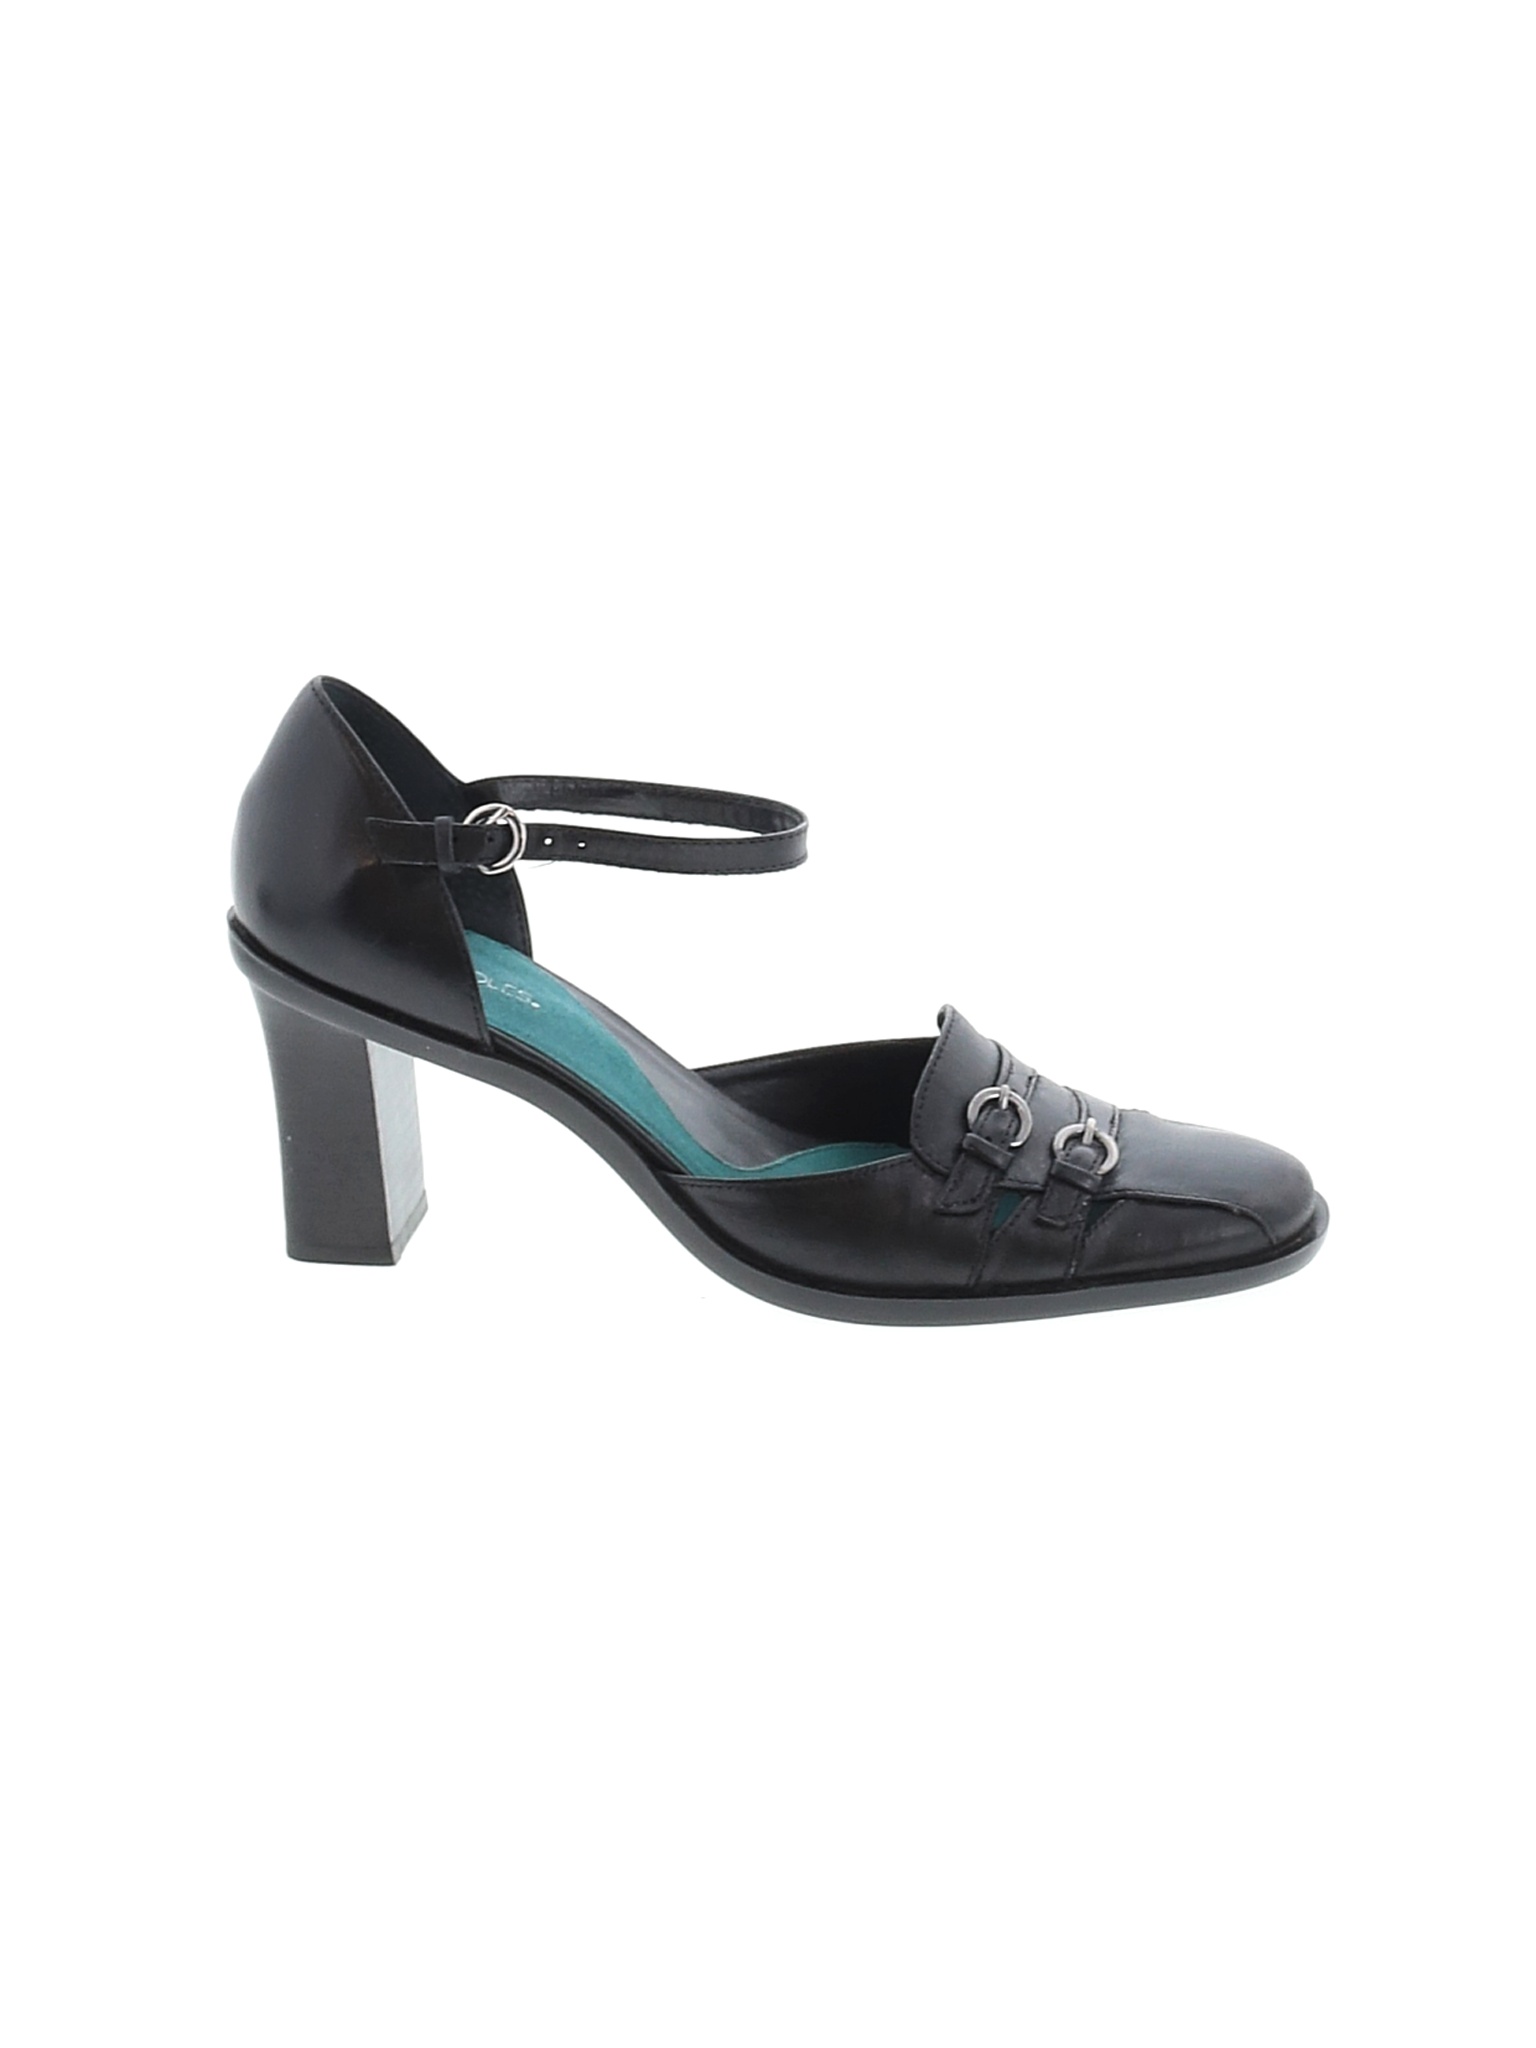 Aerosoles Women Black Heels US 6.5 | eBay